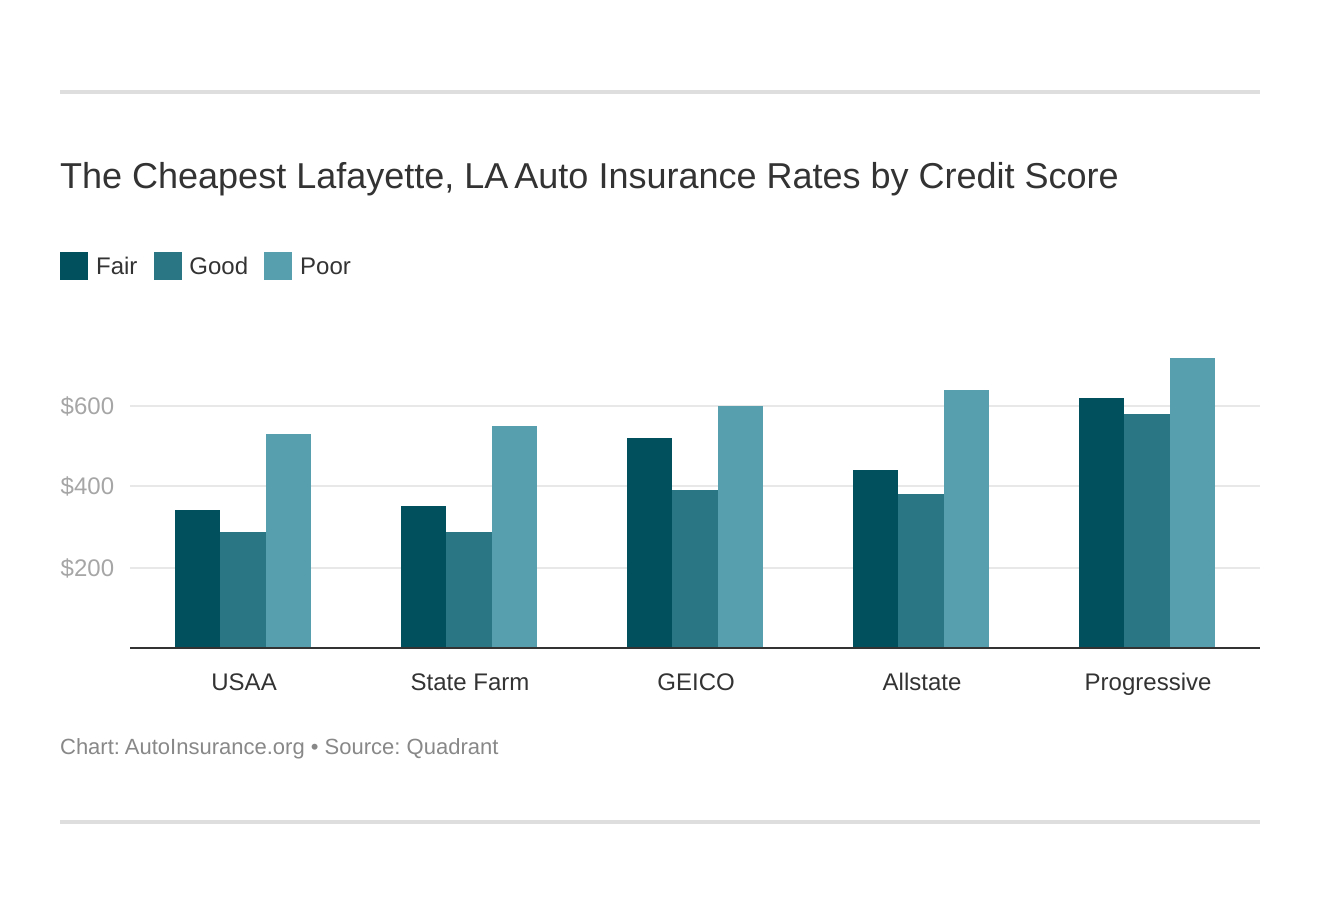 The Cheapest Lafayette, LA Auto Insurance Rates by Credit Score